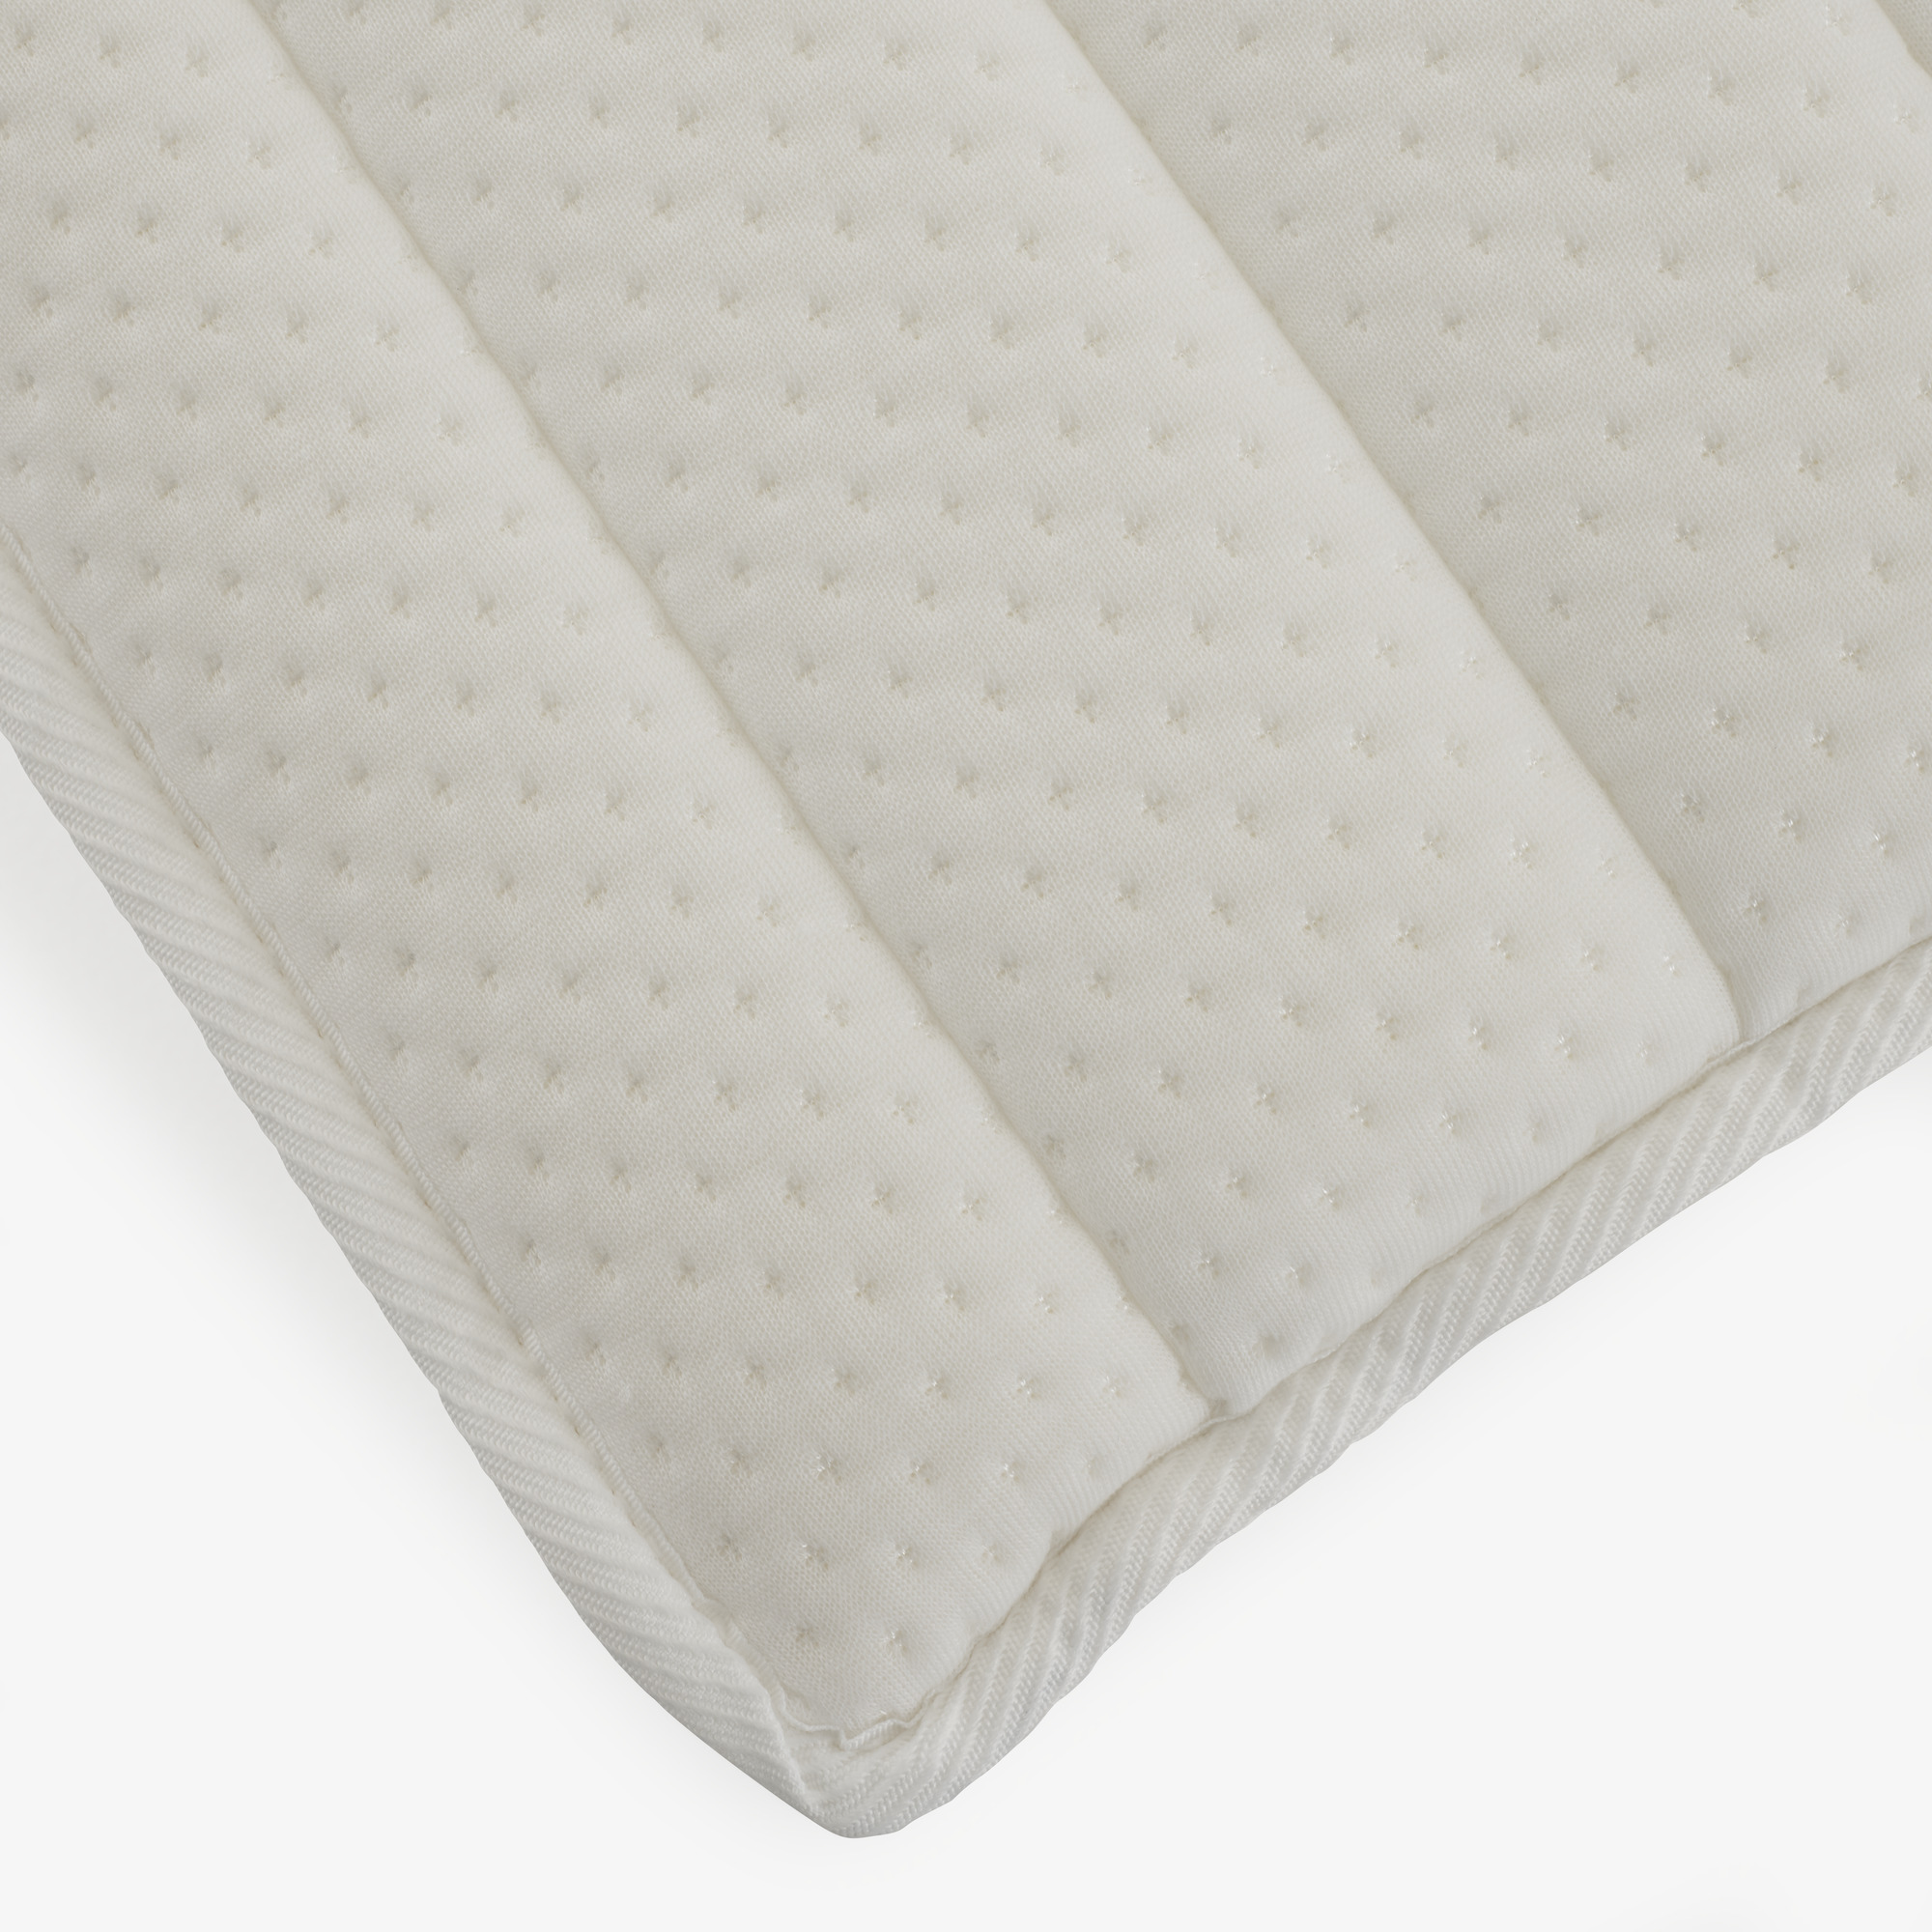 Image Bultex + viscoelastic foam (sensus) mattresses 5